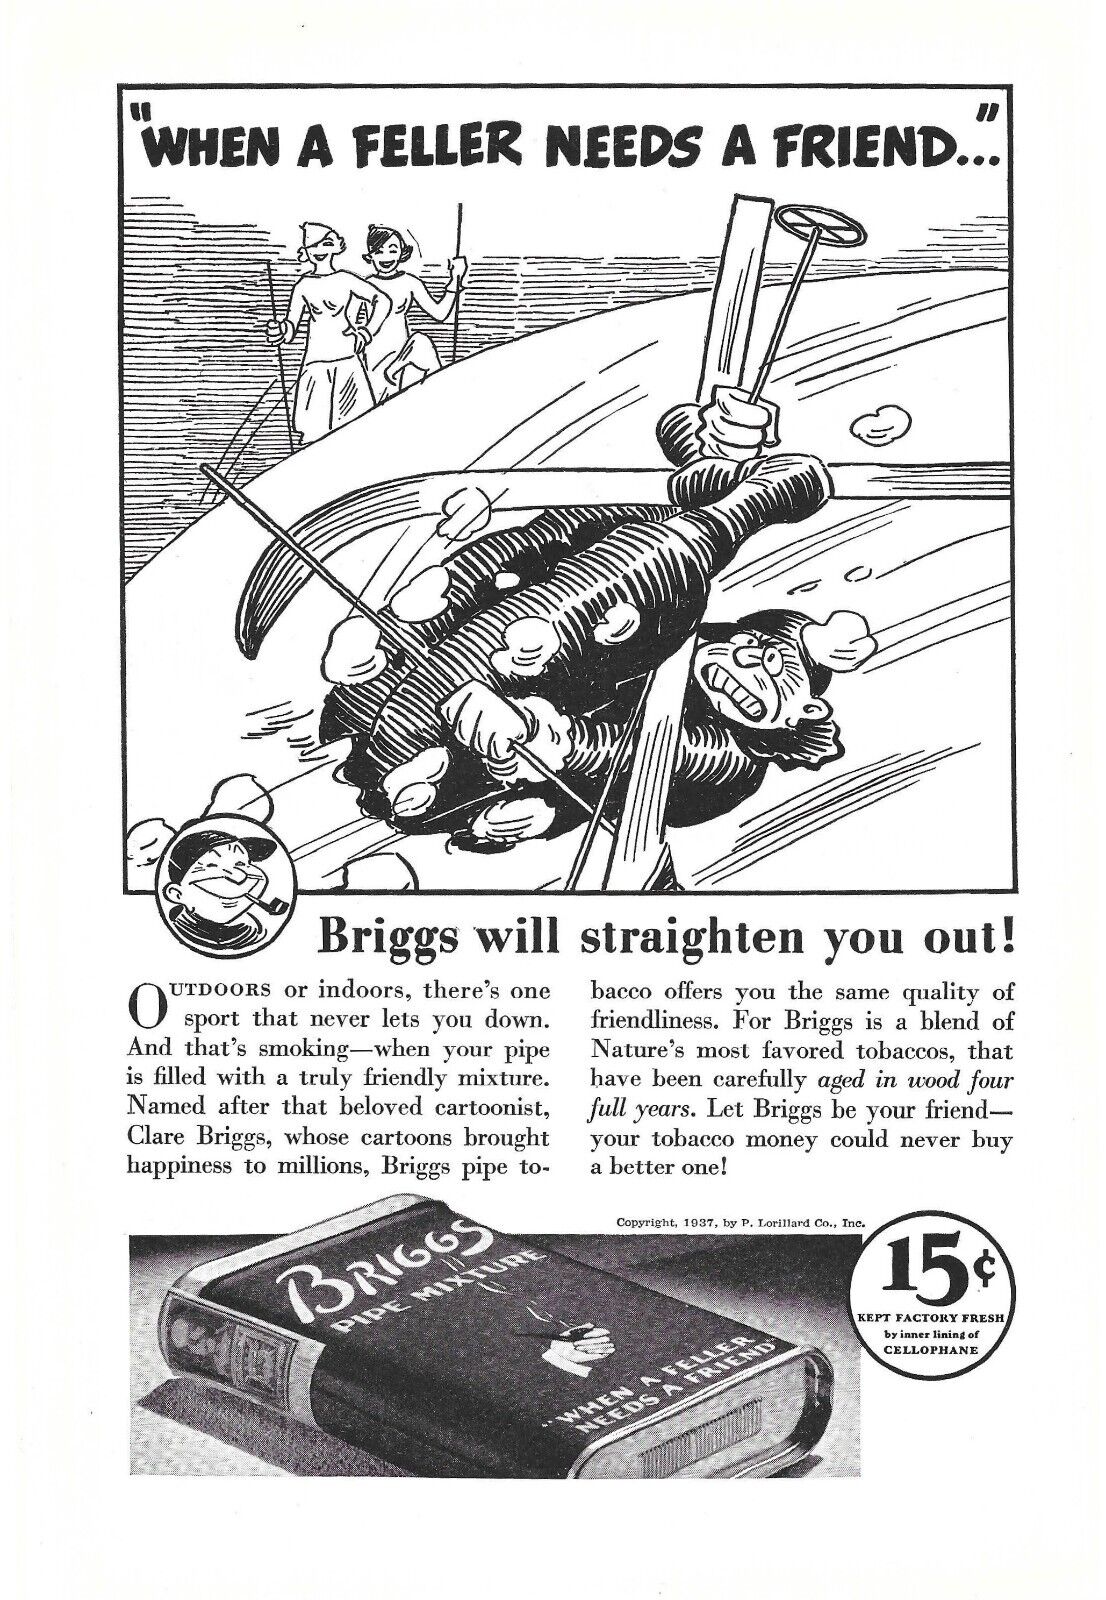 1937 Briggs Pipe Mixture Tobacco Vintage Print Ad Smoking Ephemera